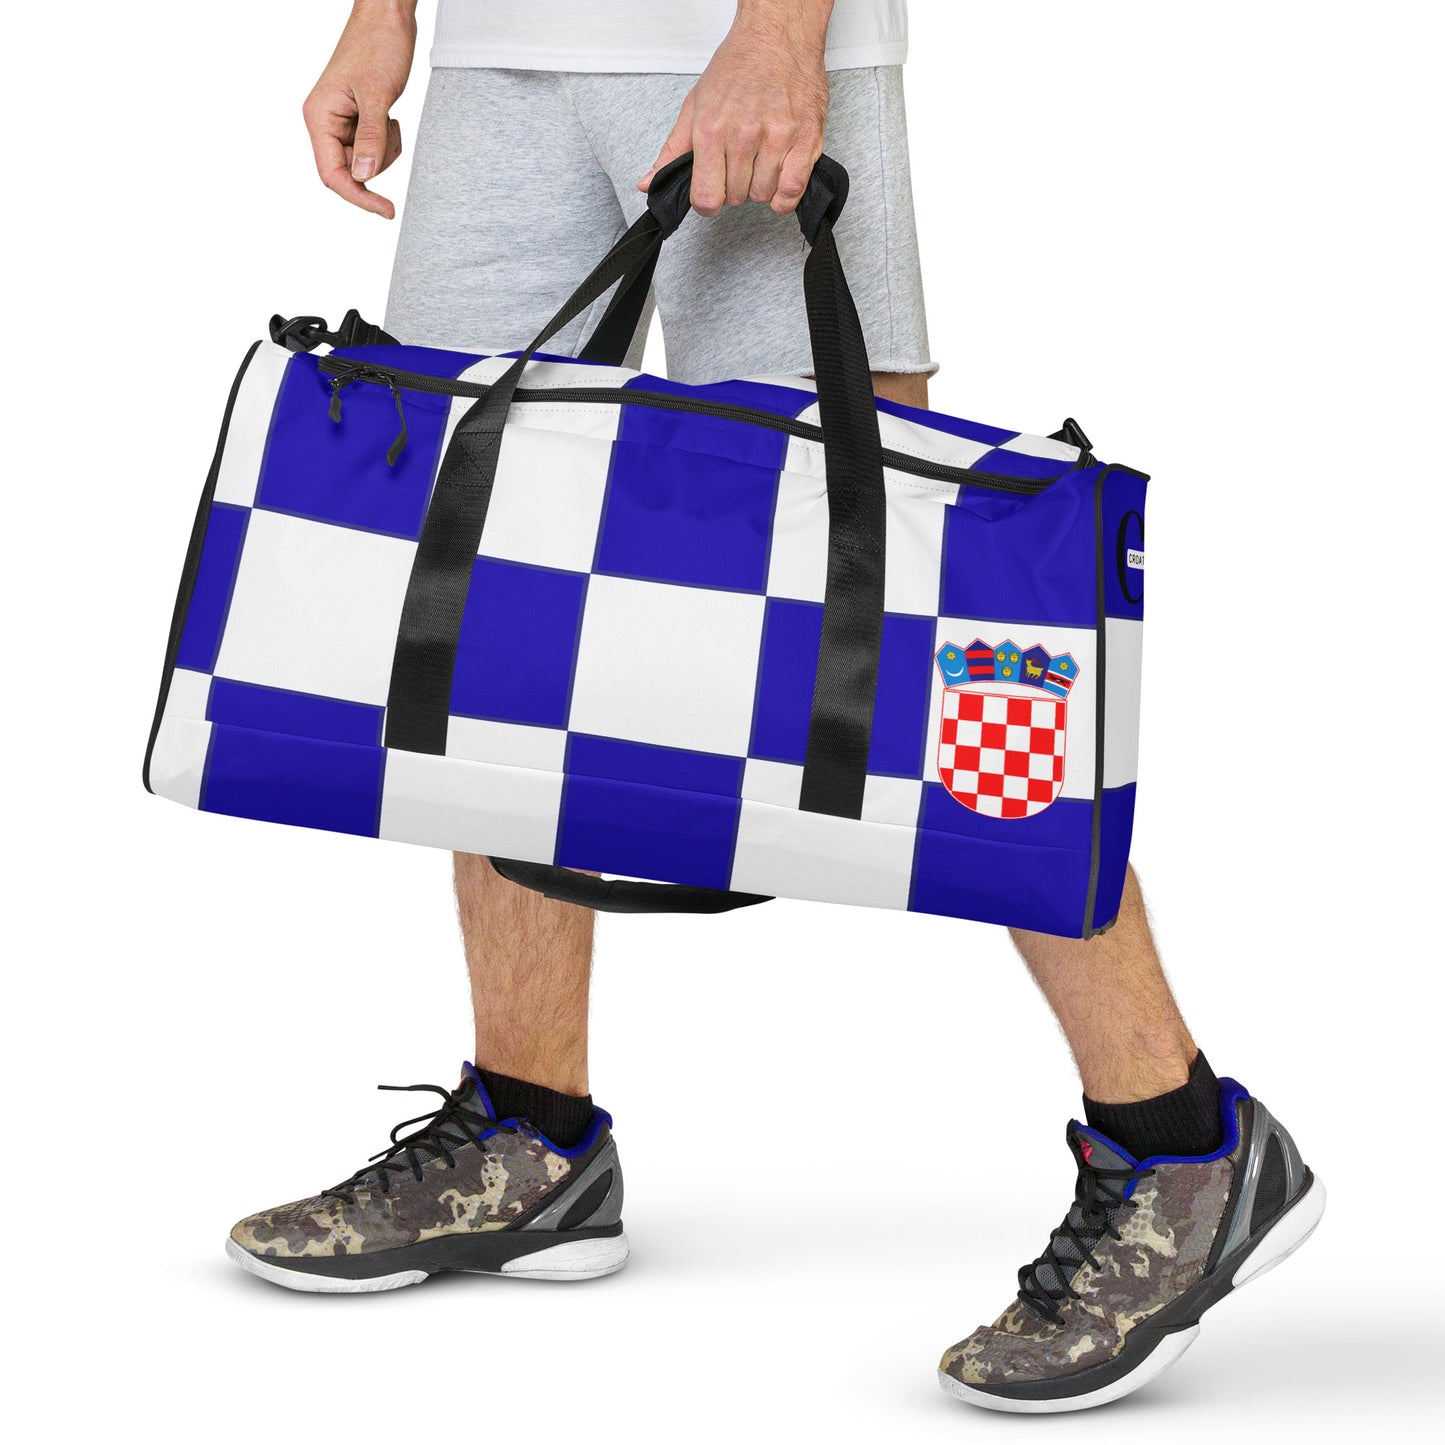 Croatian Blue Checkered 'bog i hrvati' Duffle bag